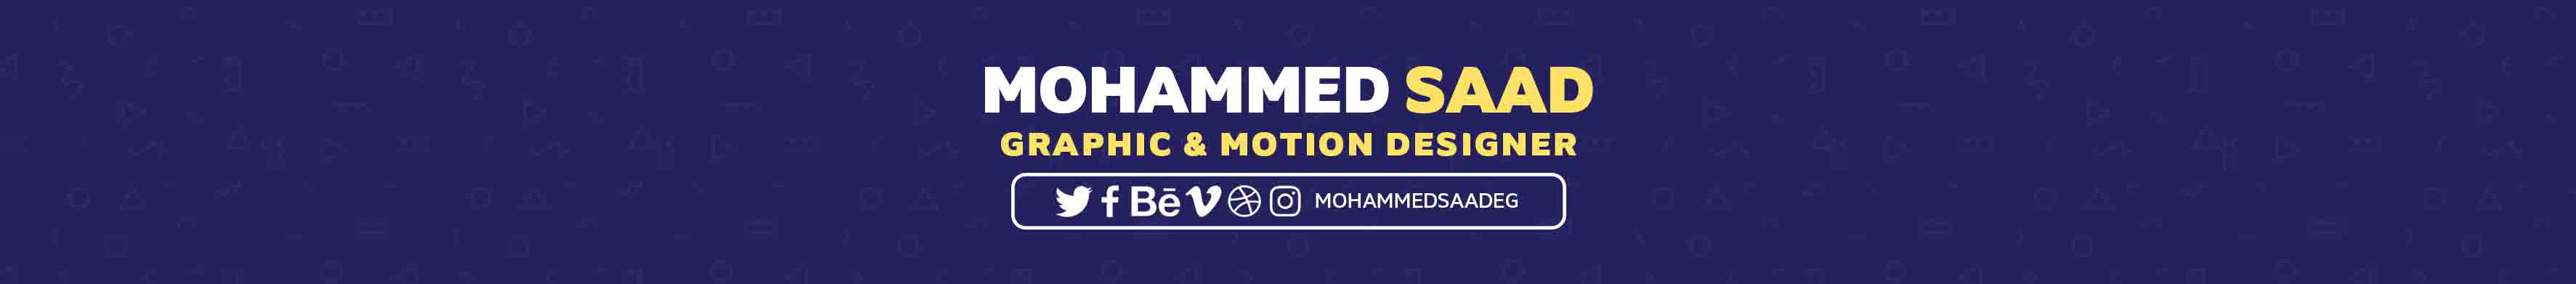 Banner de perfil de Mohammed Saad